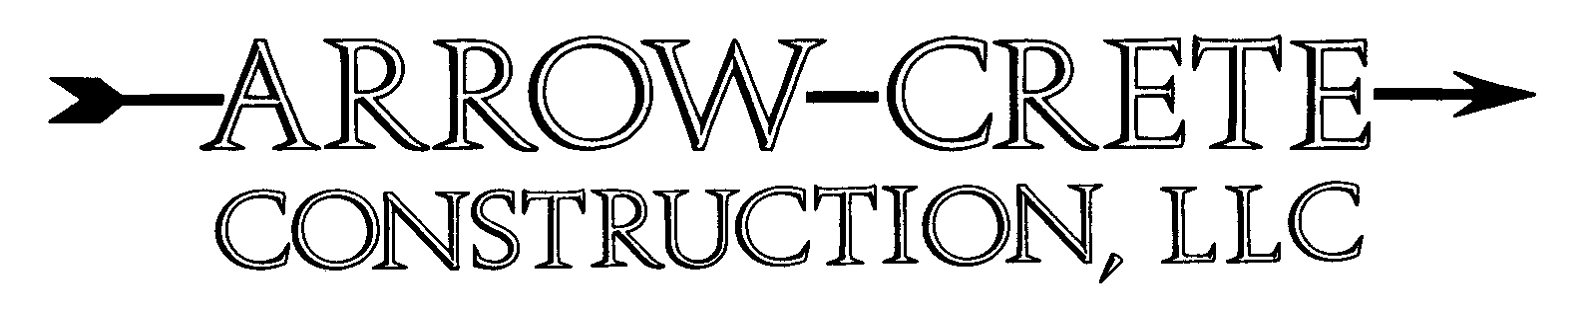 ARROW-CRETE CONSTRUCTION LLC